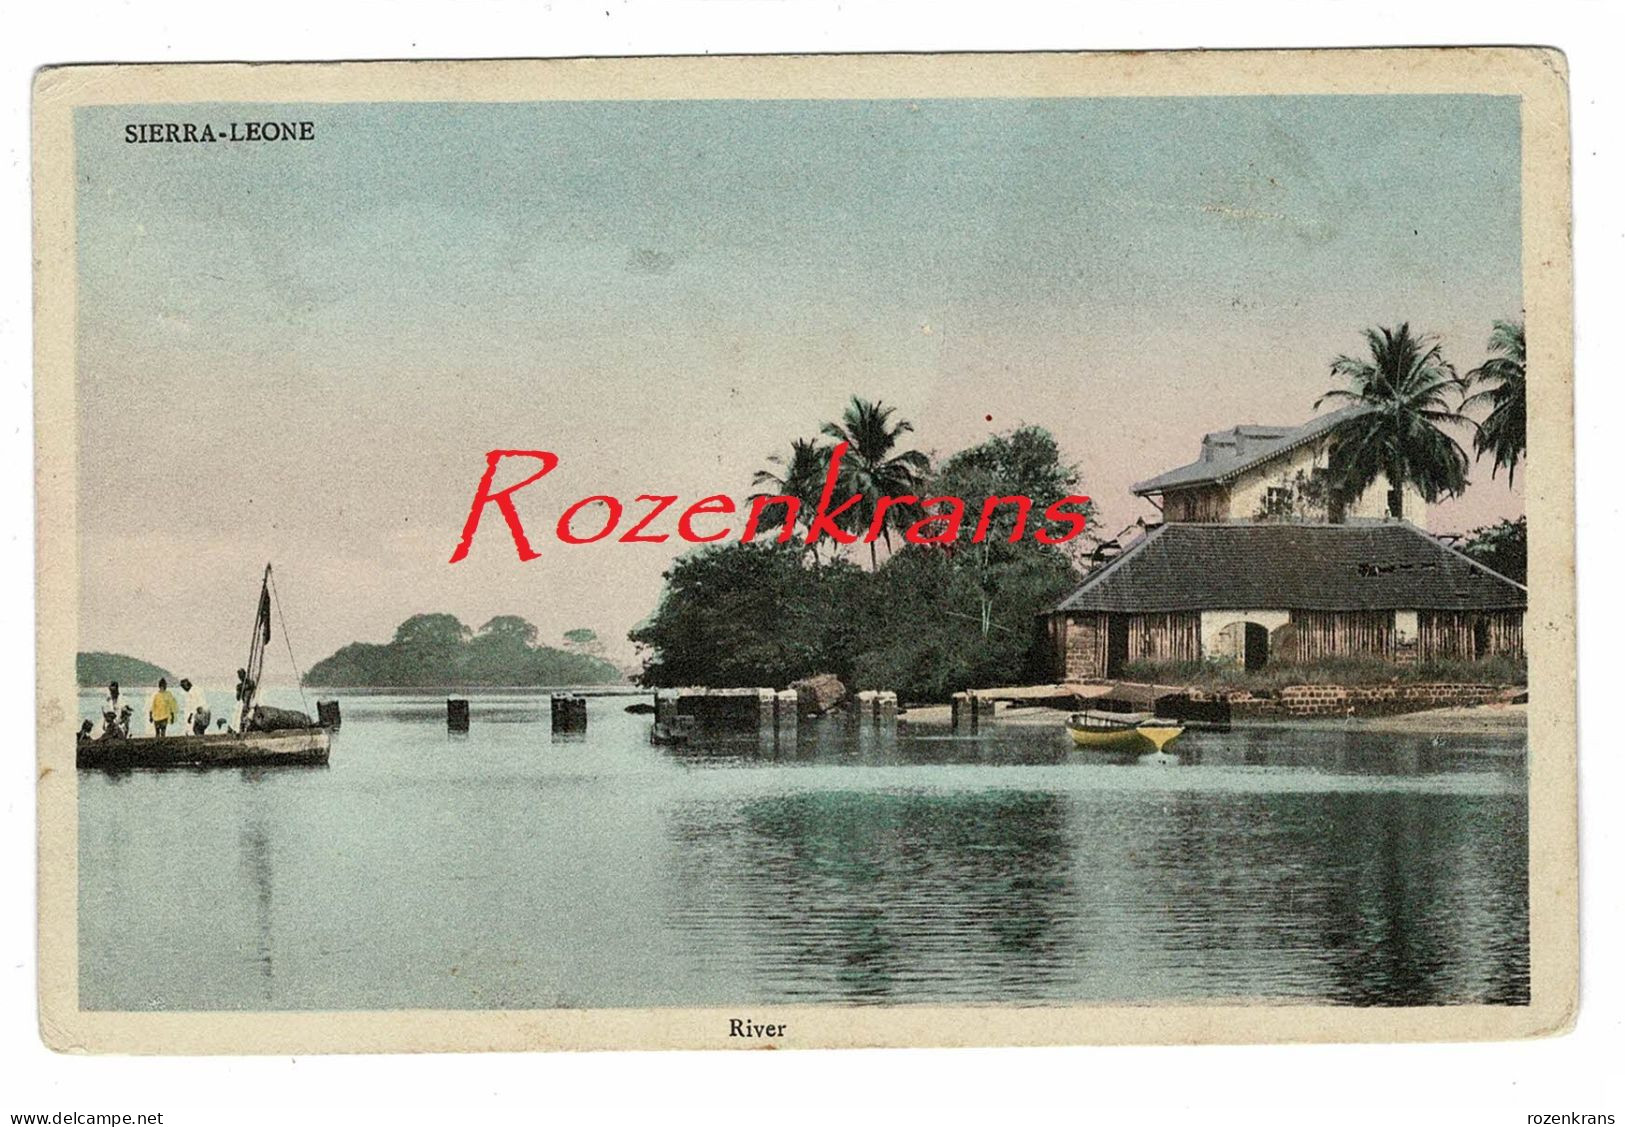 Sierra Leone - River Riviere Carte Postale CPA Old Postcard Afrique Africa - Sierra Leone